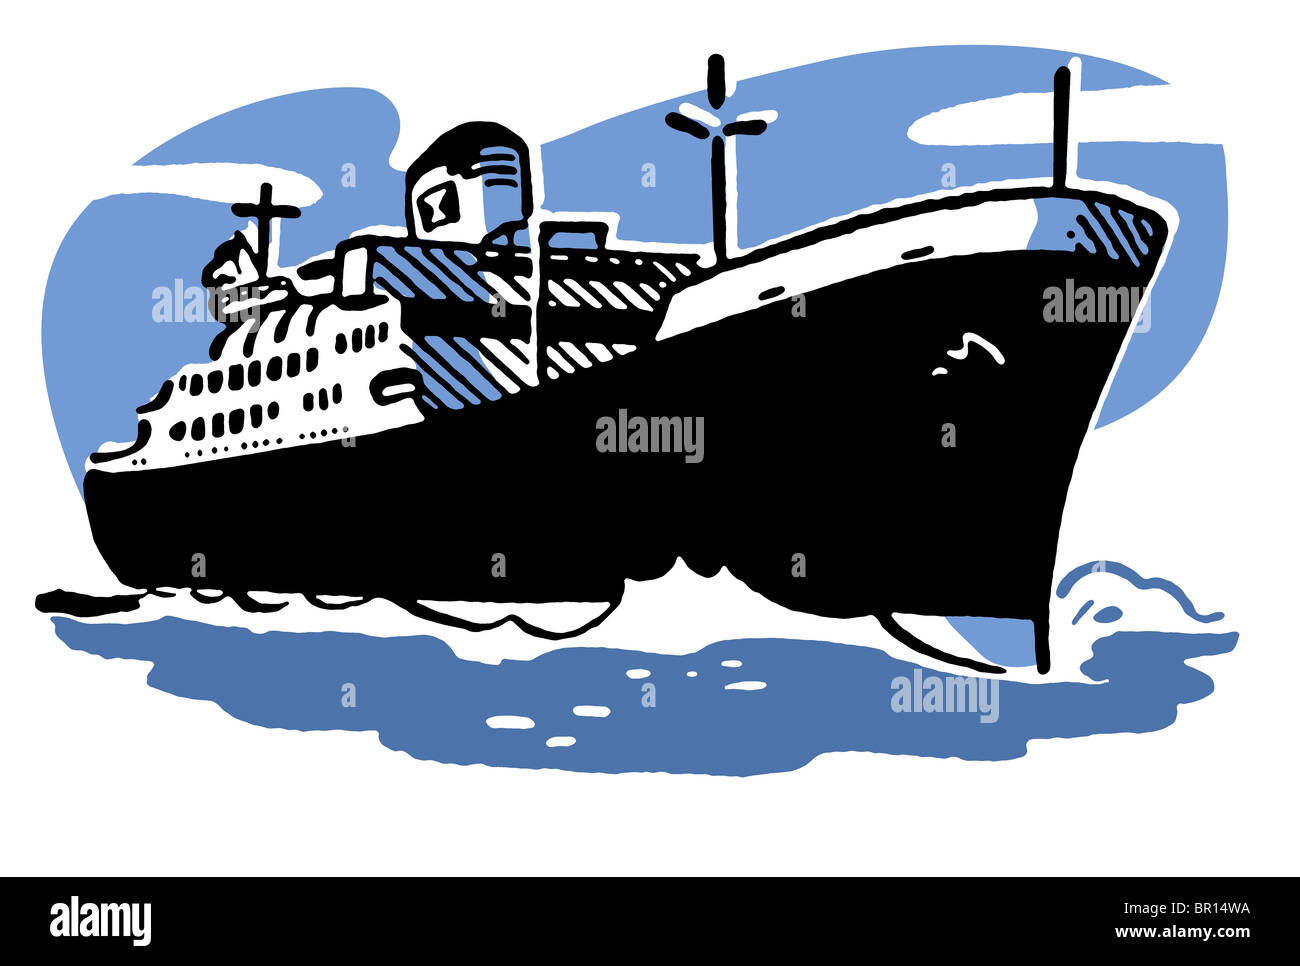 A vintage illustration of a ship Stock Photo